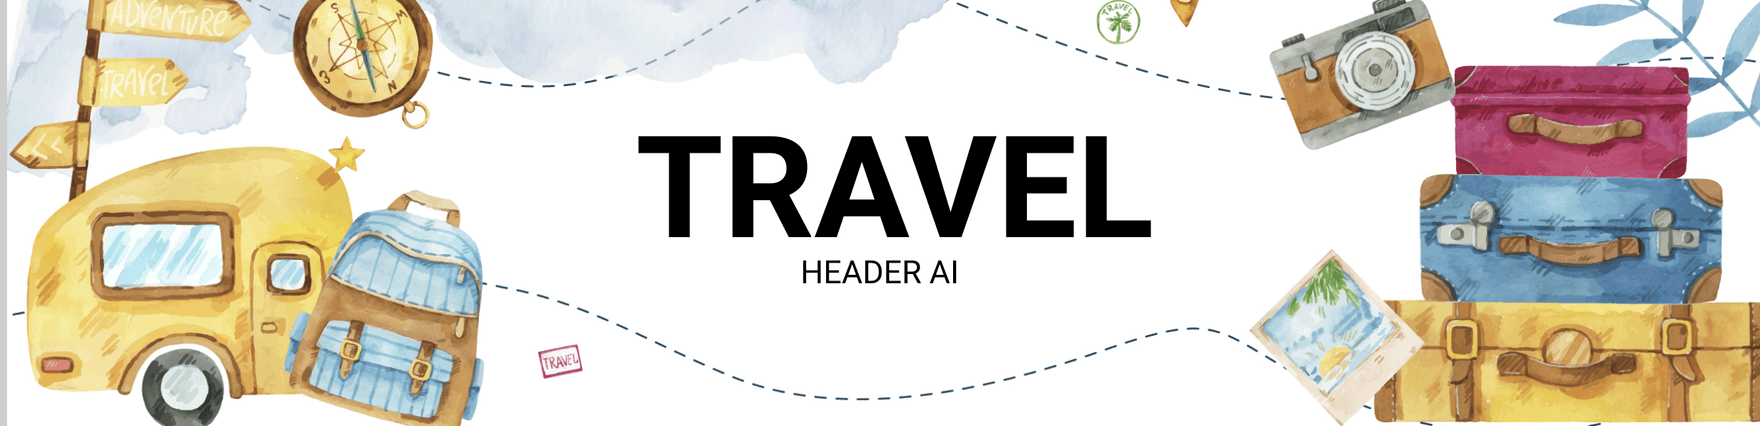 Free Travel Header AI Template